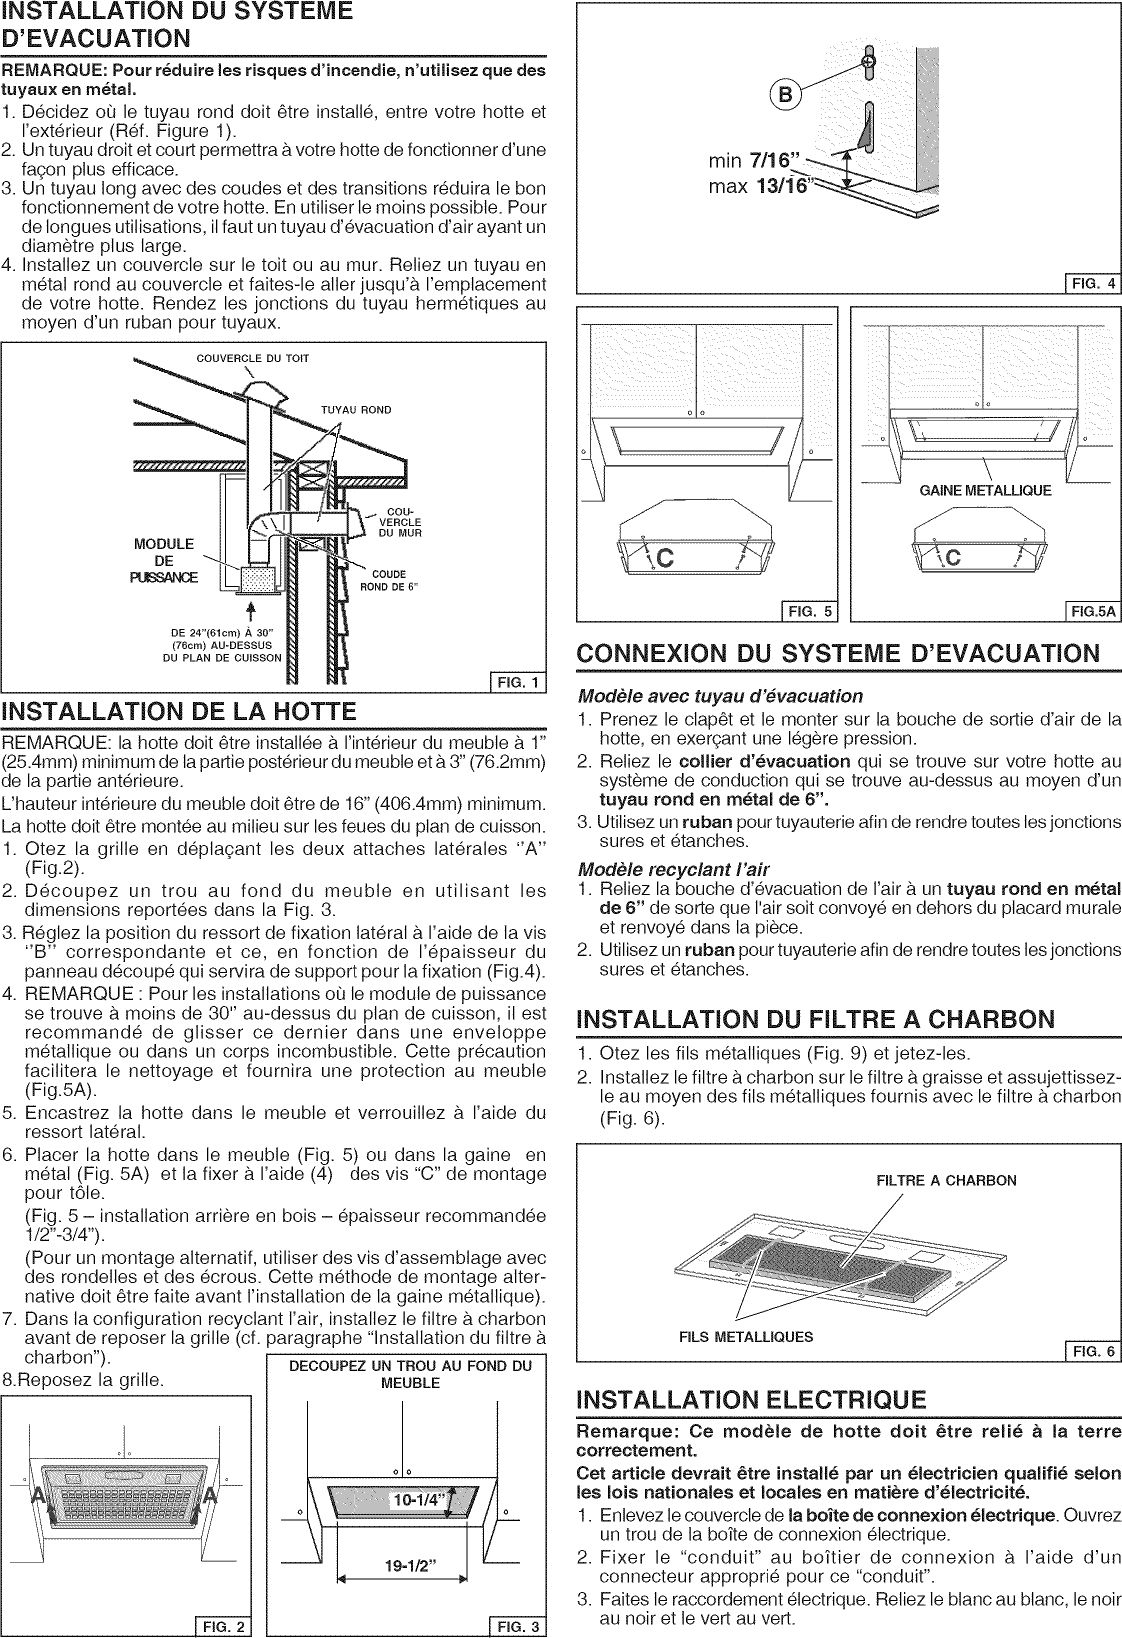 Page 6 of 8 - BROAN  Range Hood Manual L1002445